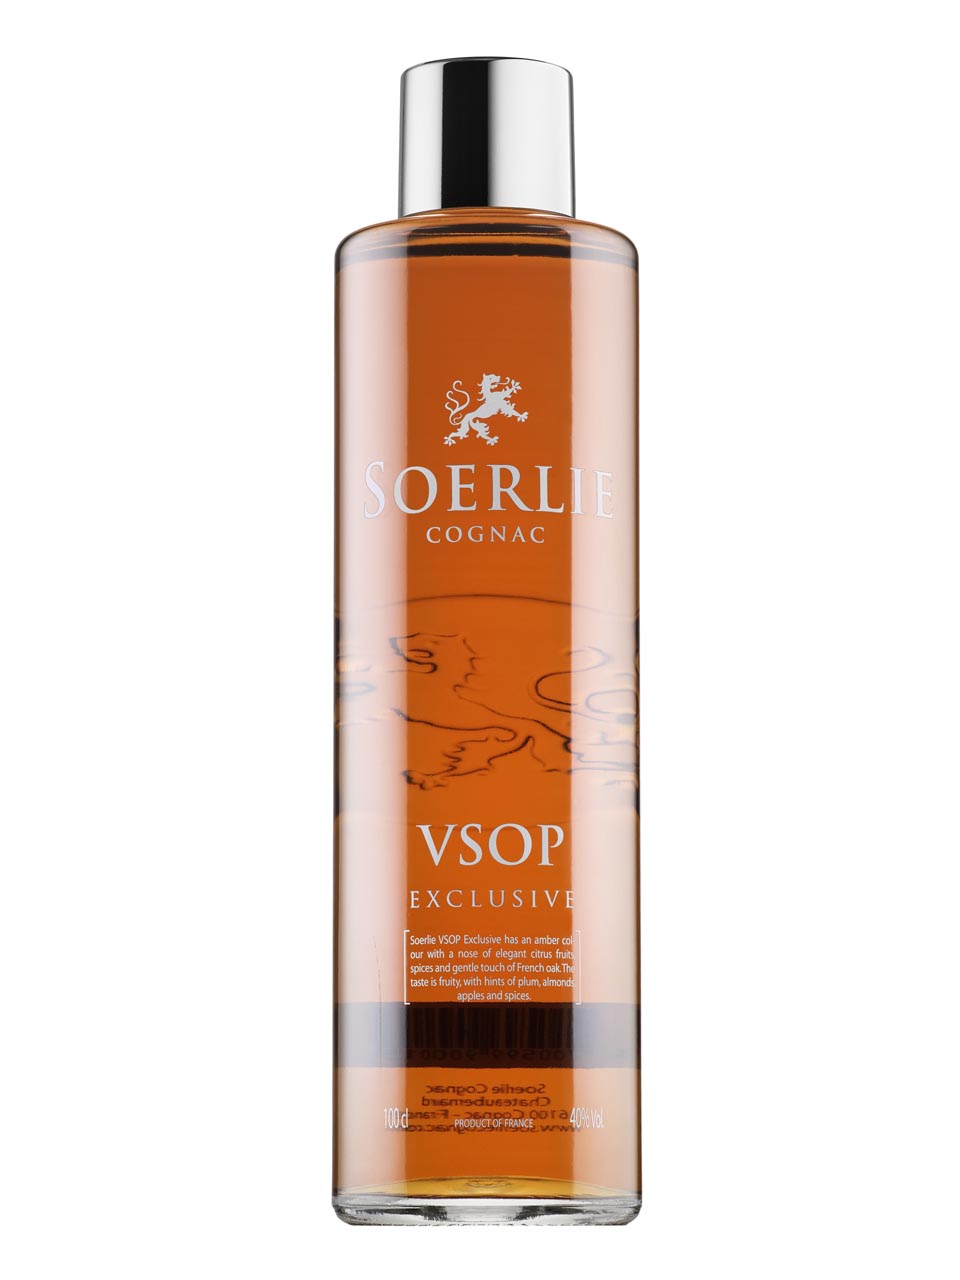 Soerlie Cognac VSOP Exclusive 40% 1L null - onesize - 1